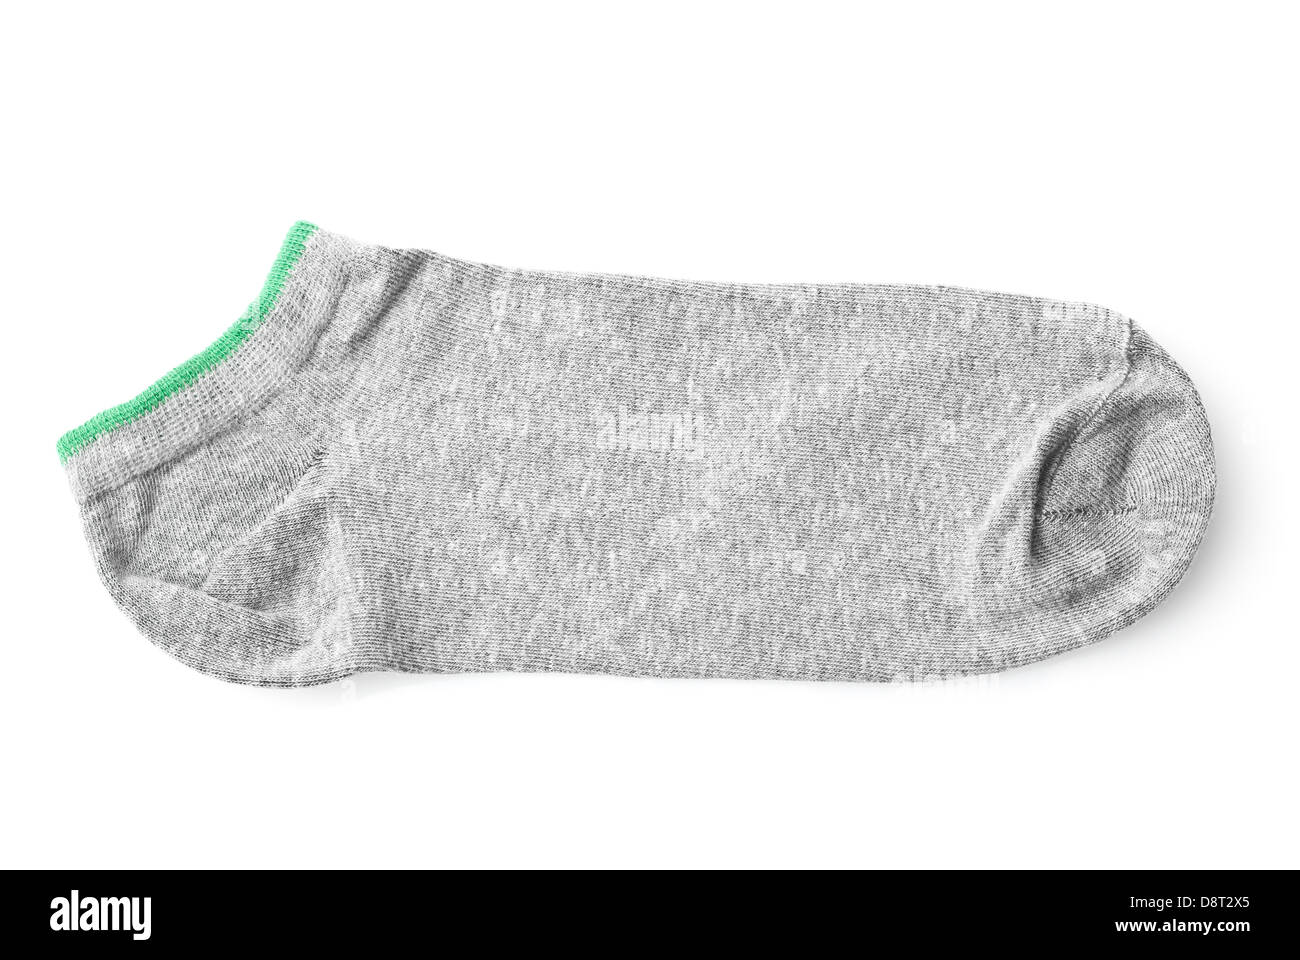 single gray sport sock isolated on white Stock Photo